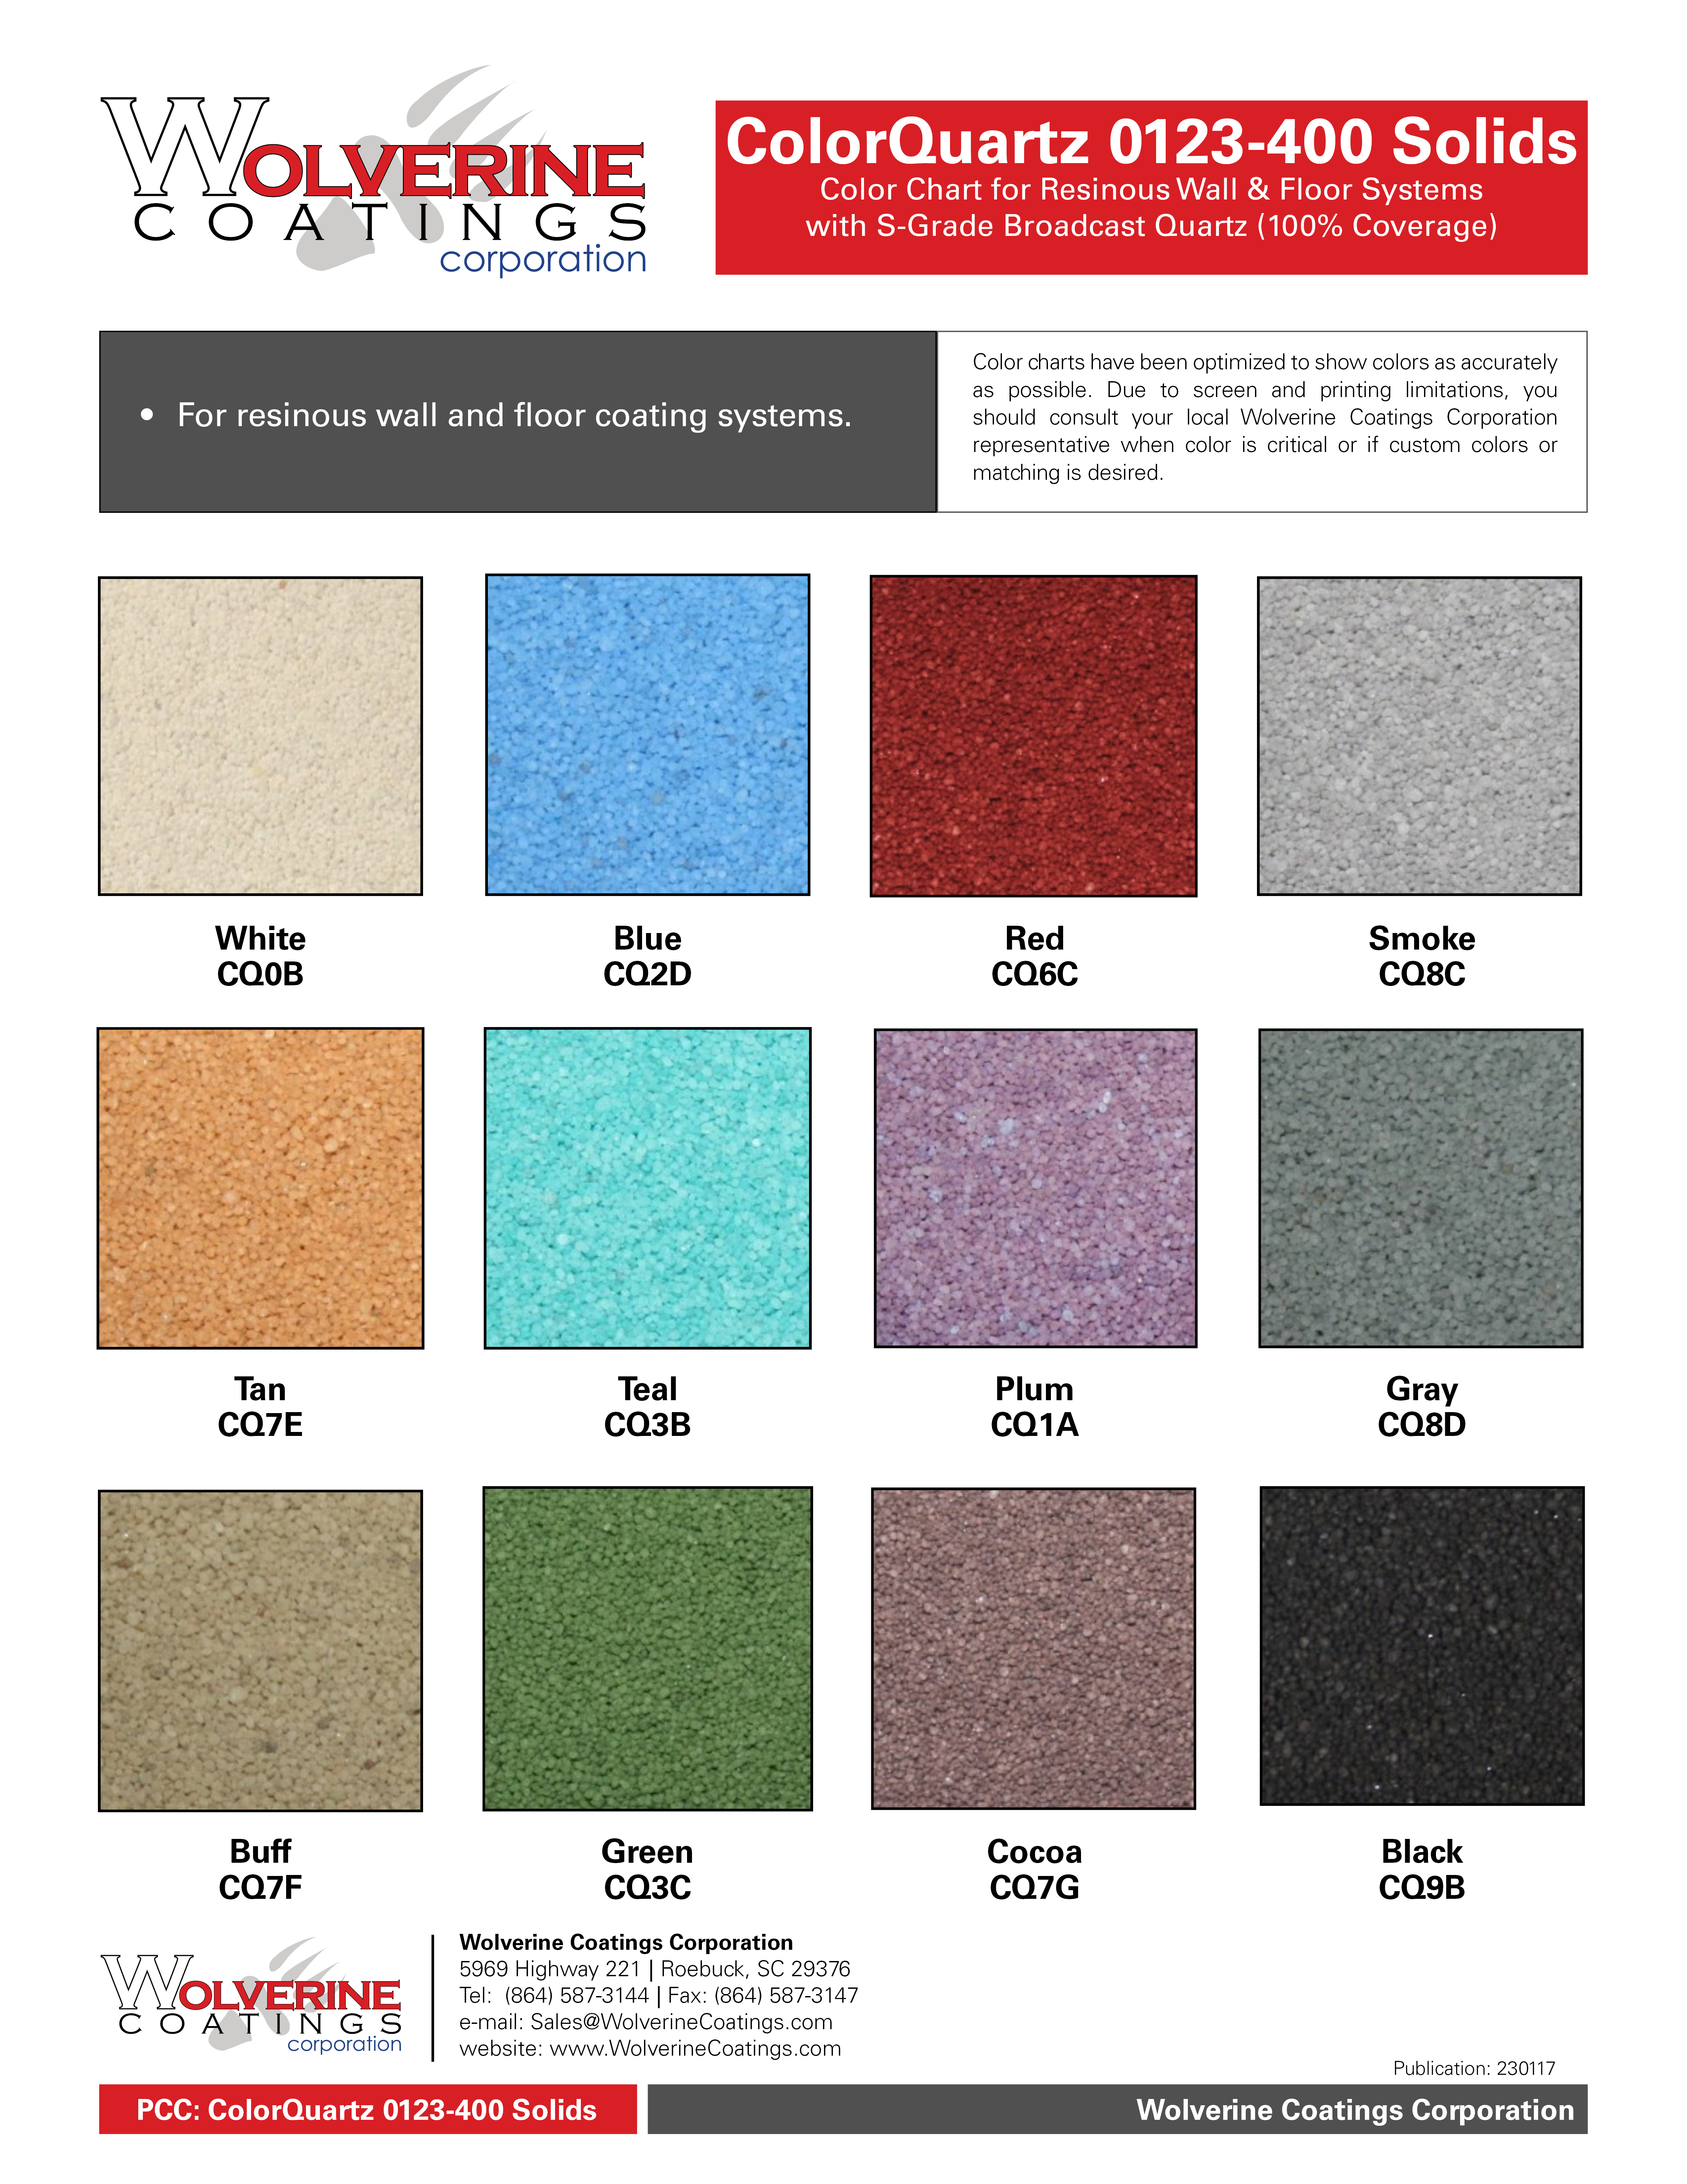 ColorQuartz 0123-400 Solids Color Chart - Product Color Charts